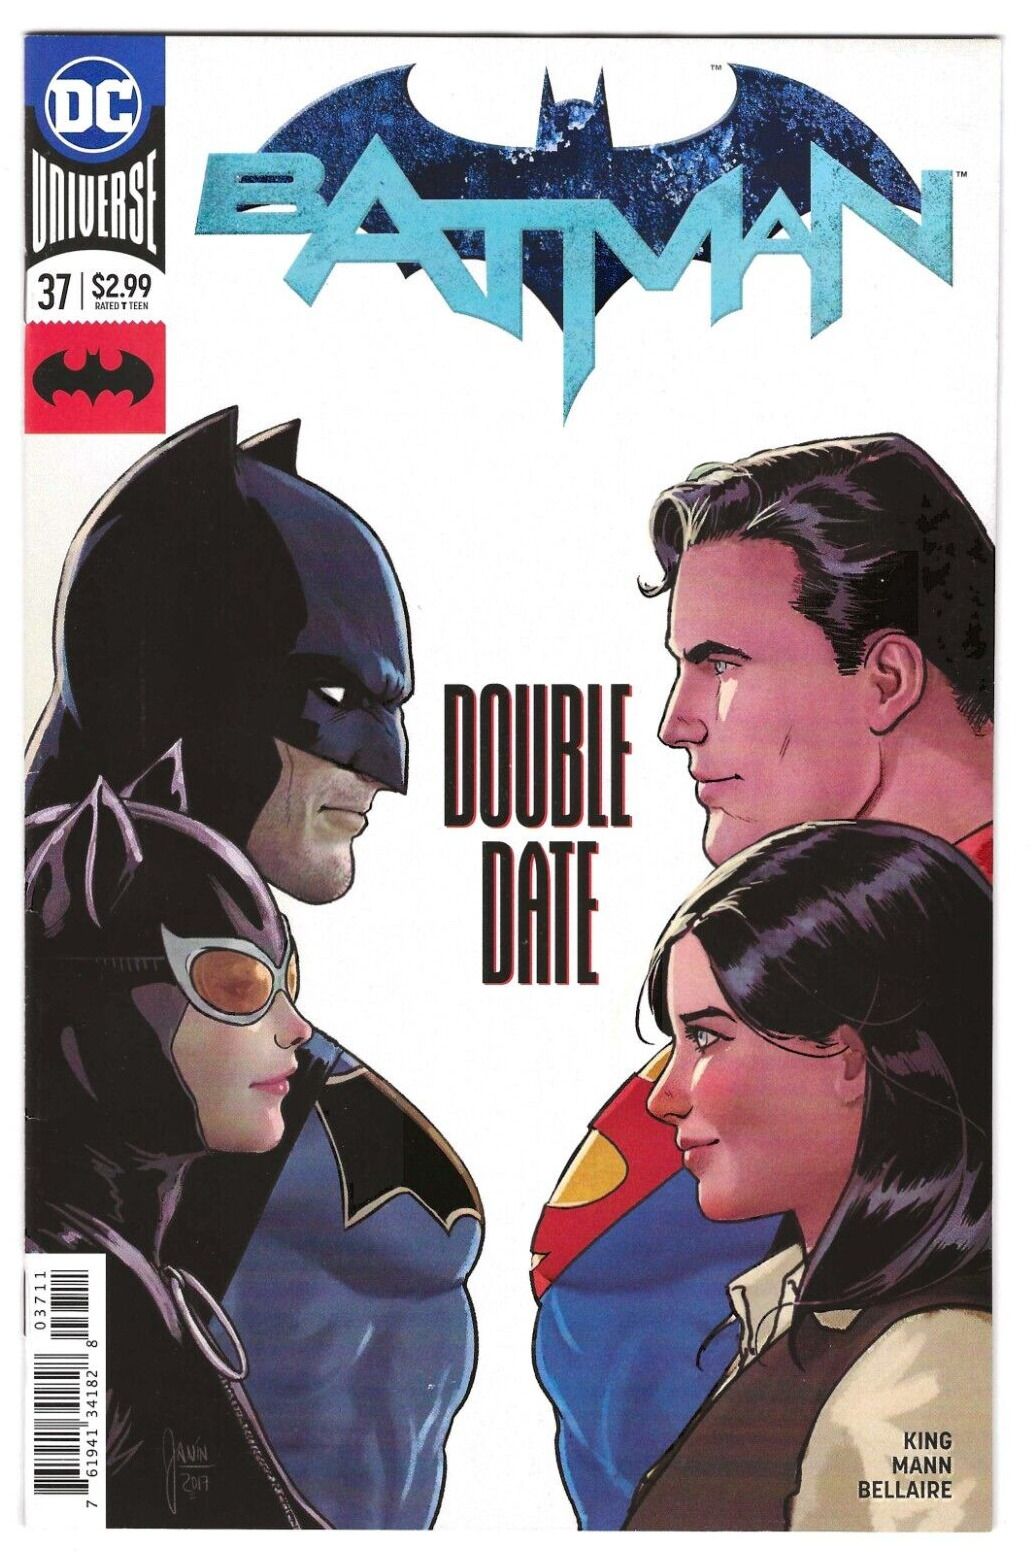 DC Comics BATMAN #37 first printing cover A